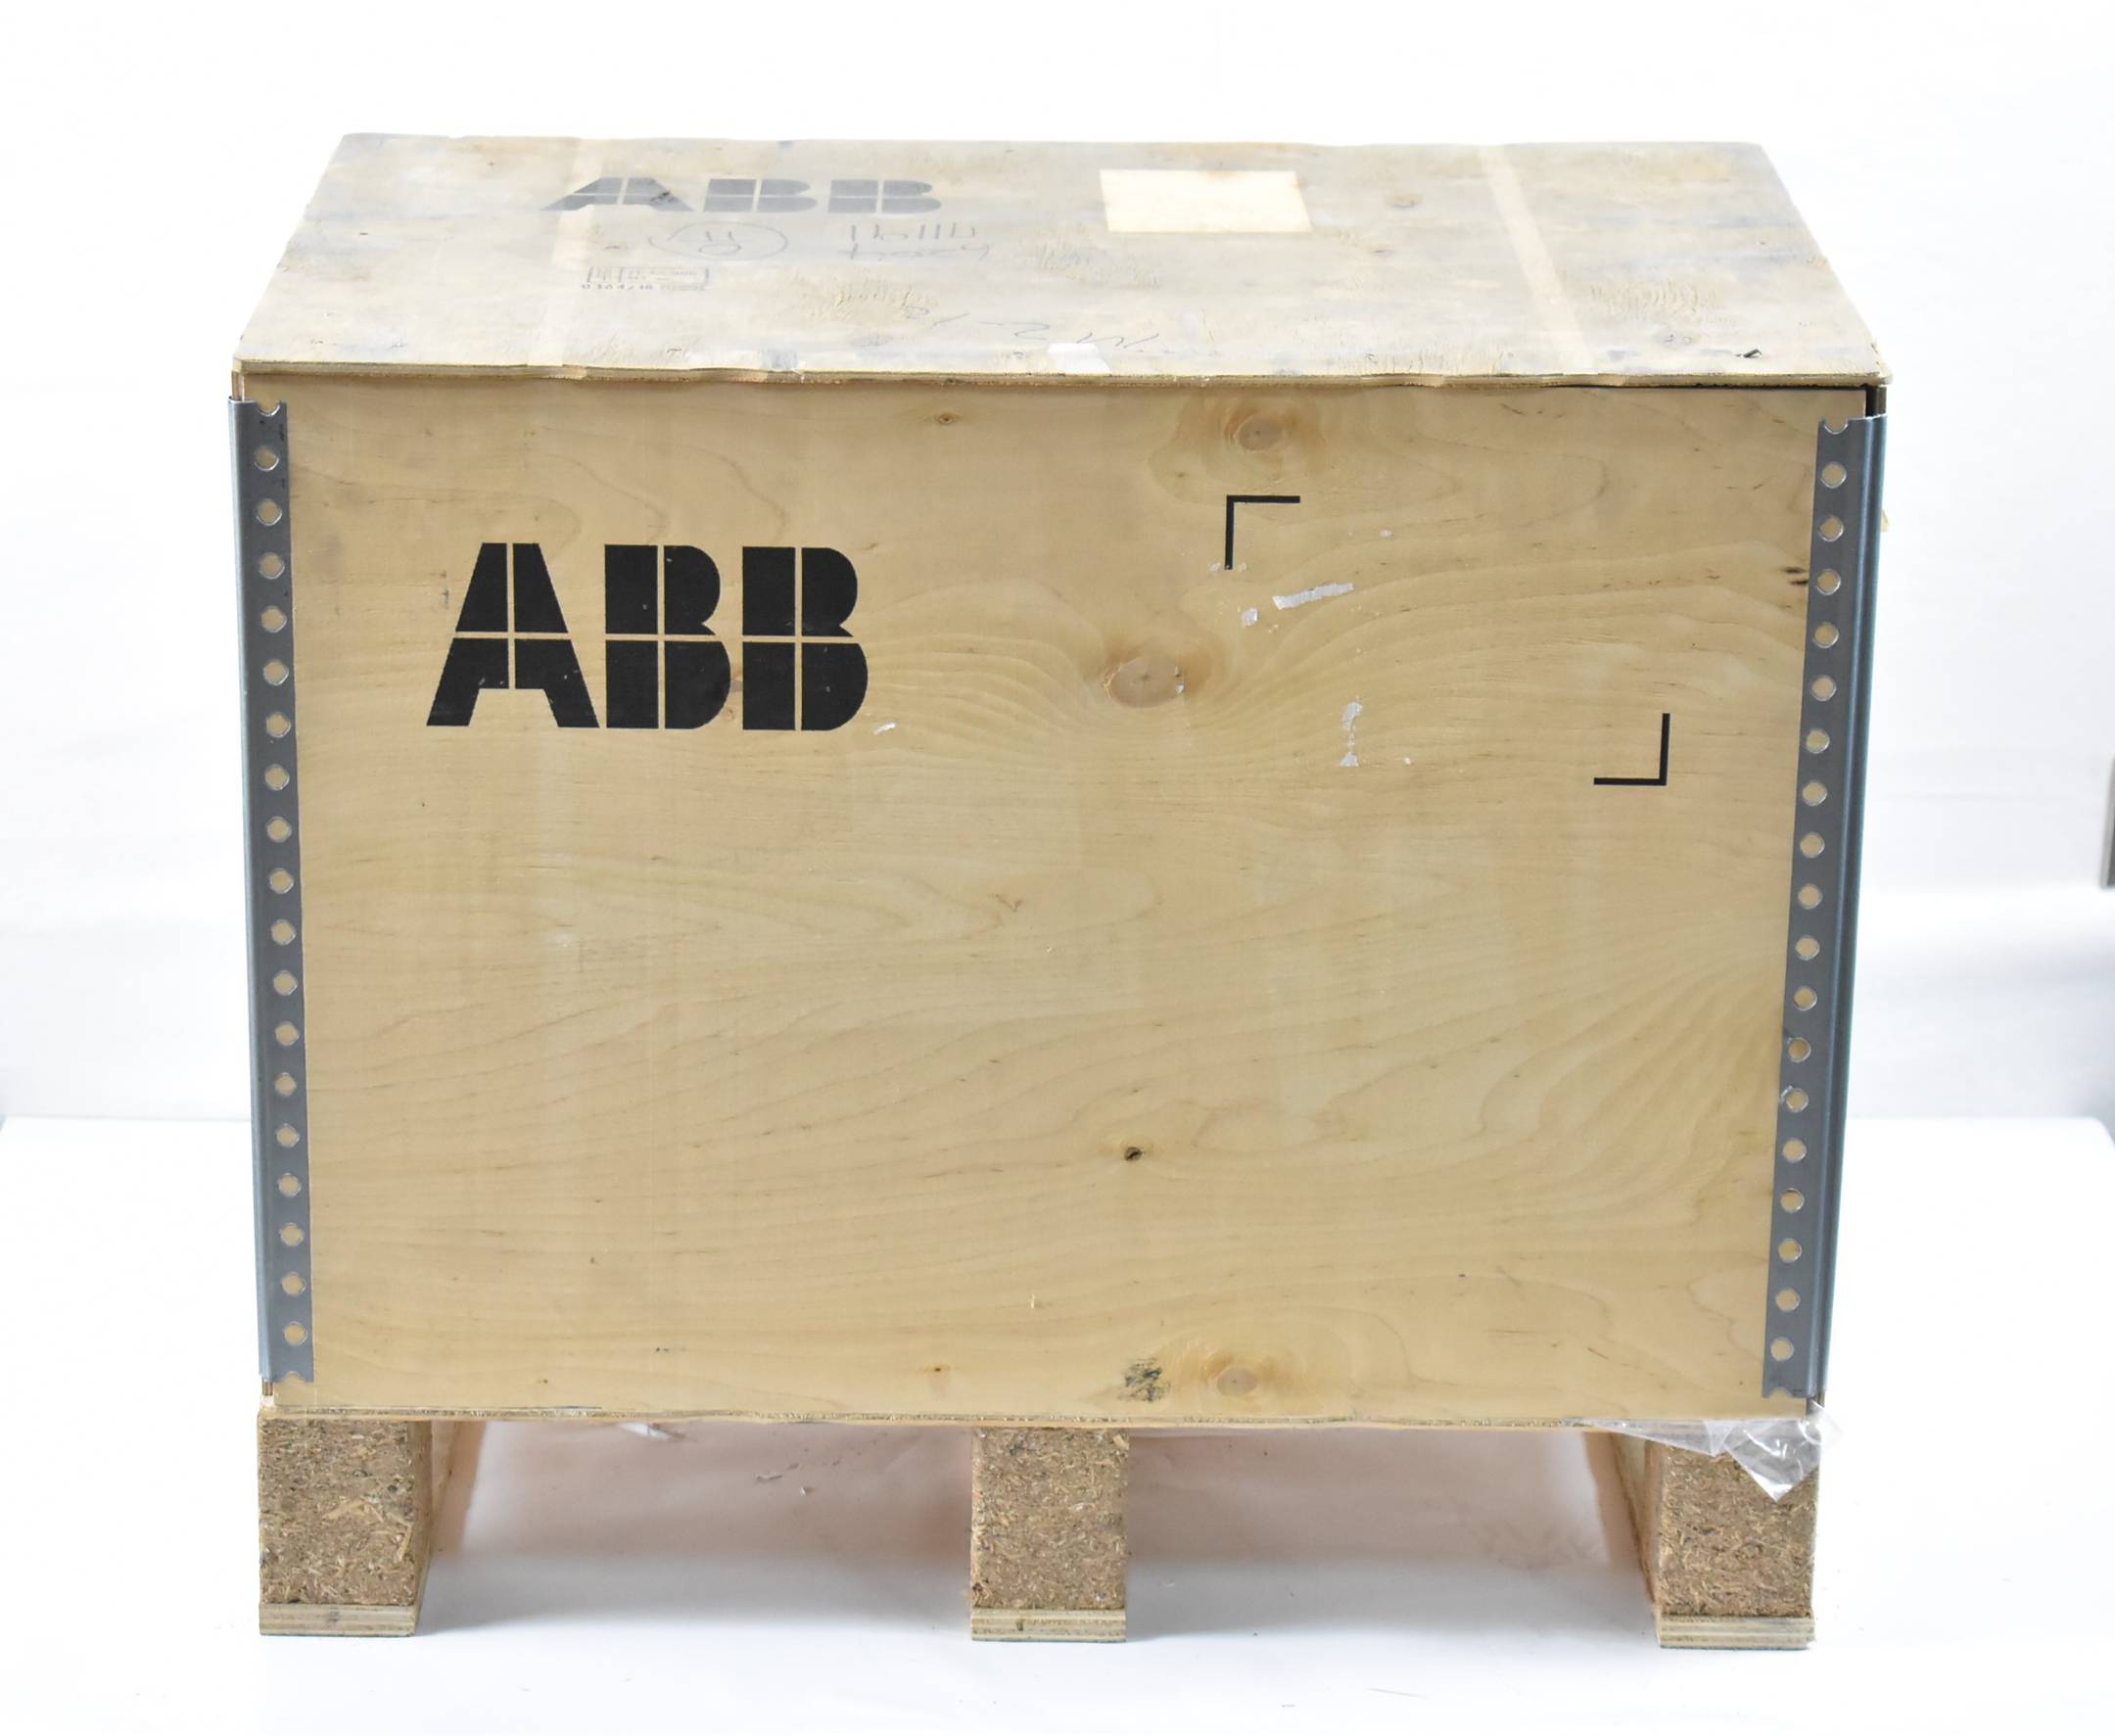 ABB Sace Emax 2 Leistungsschalter 400V 220-240v AC/DC E4.2N Iu 4000 SACEE4.2N